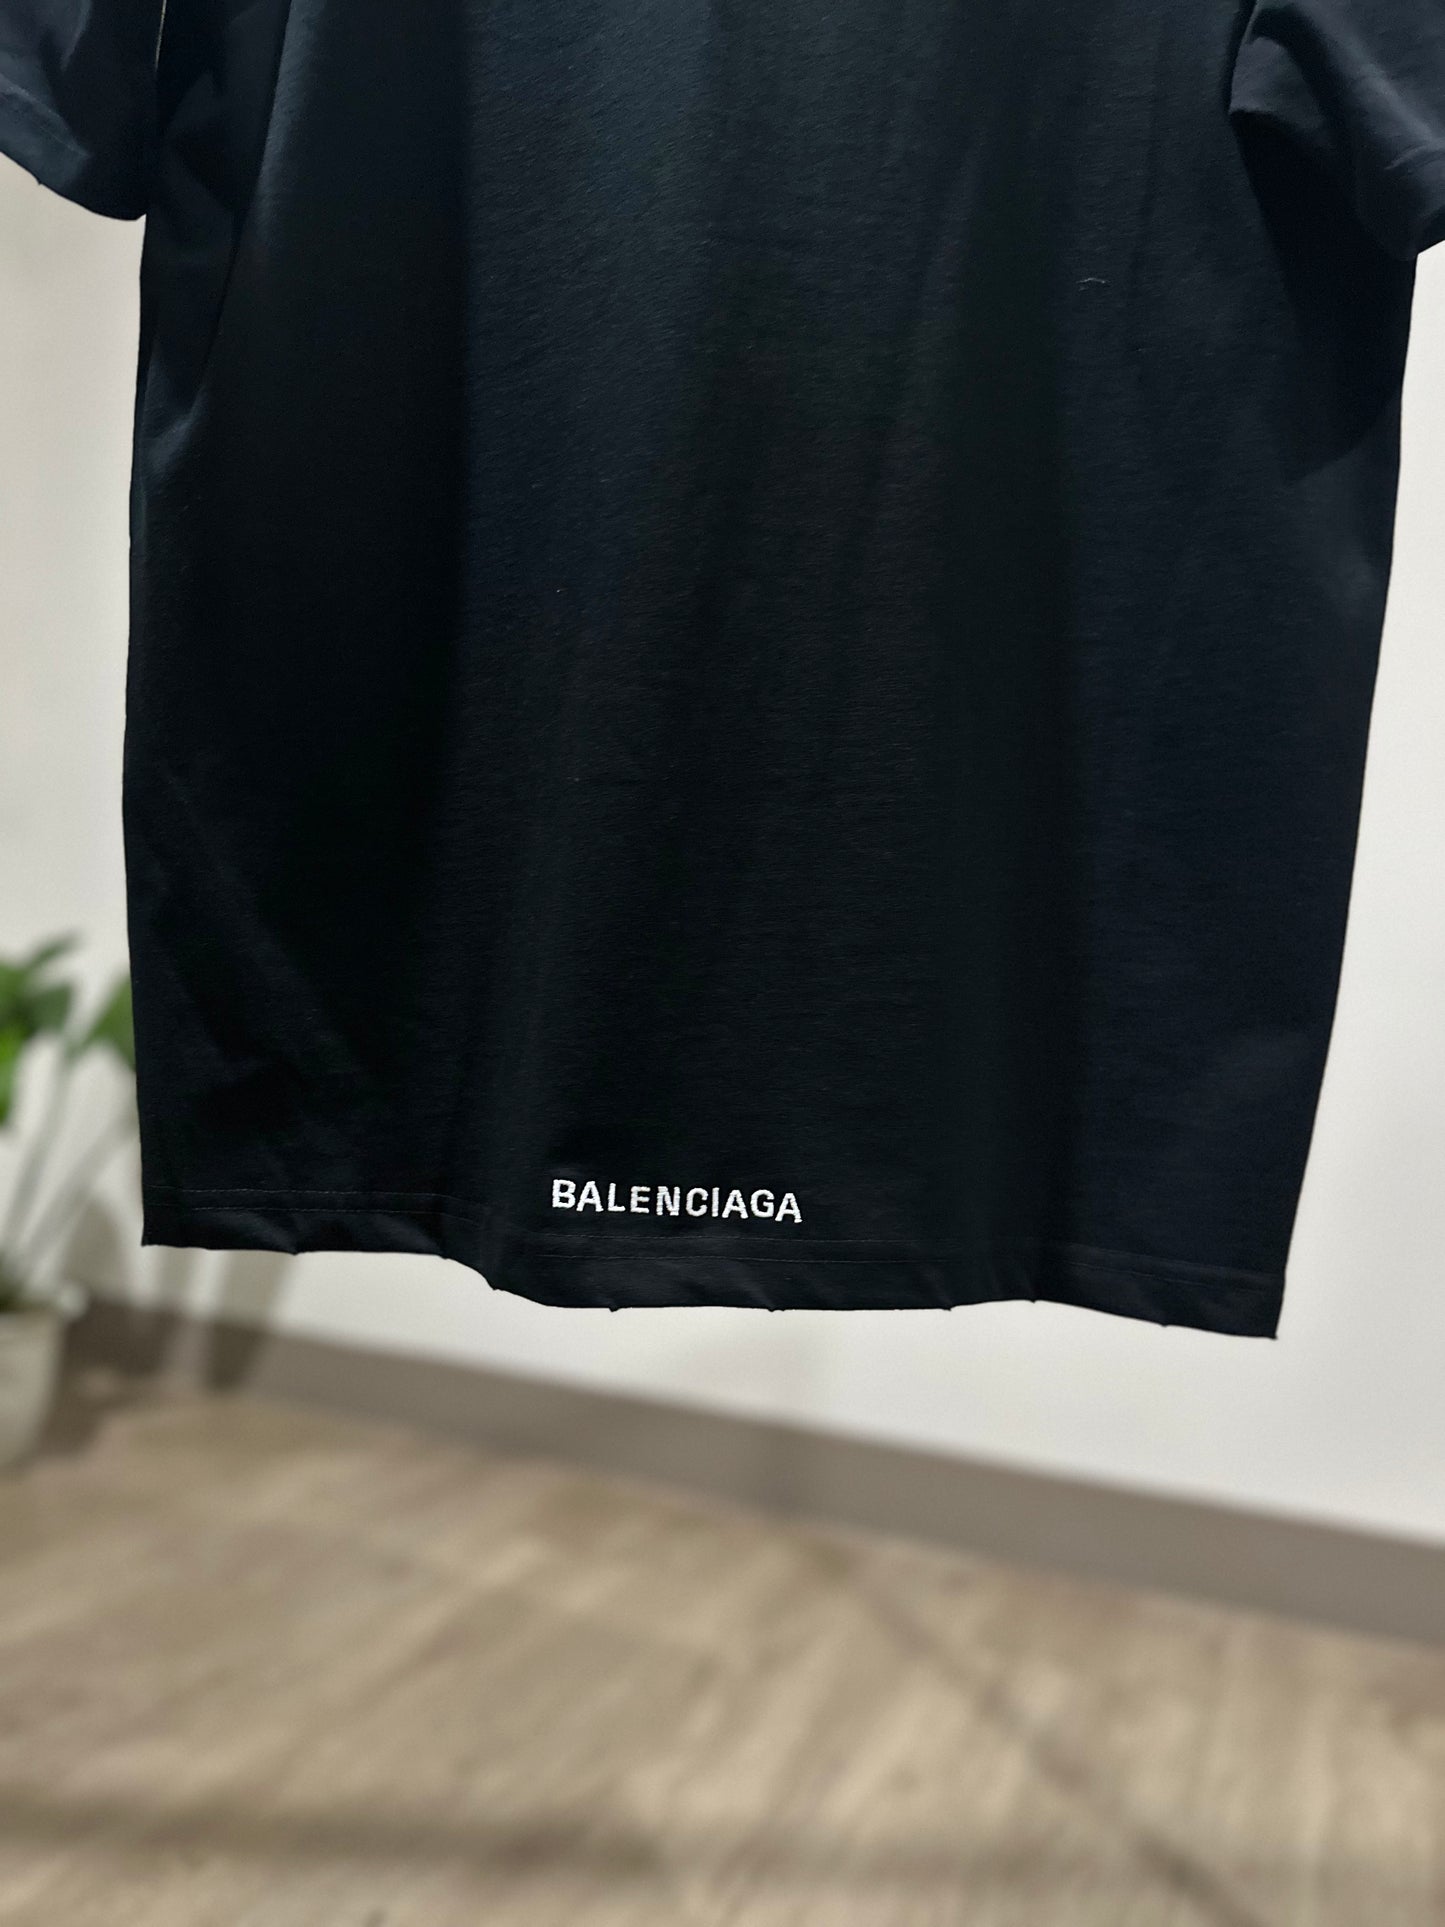 Balenciaga Je t'aime T-Shirt (Black)